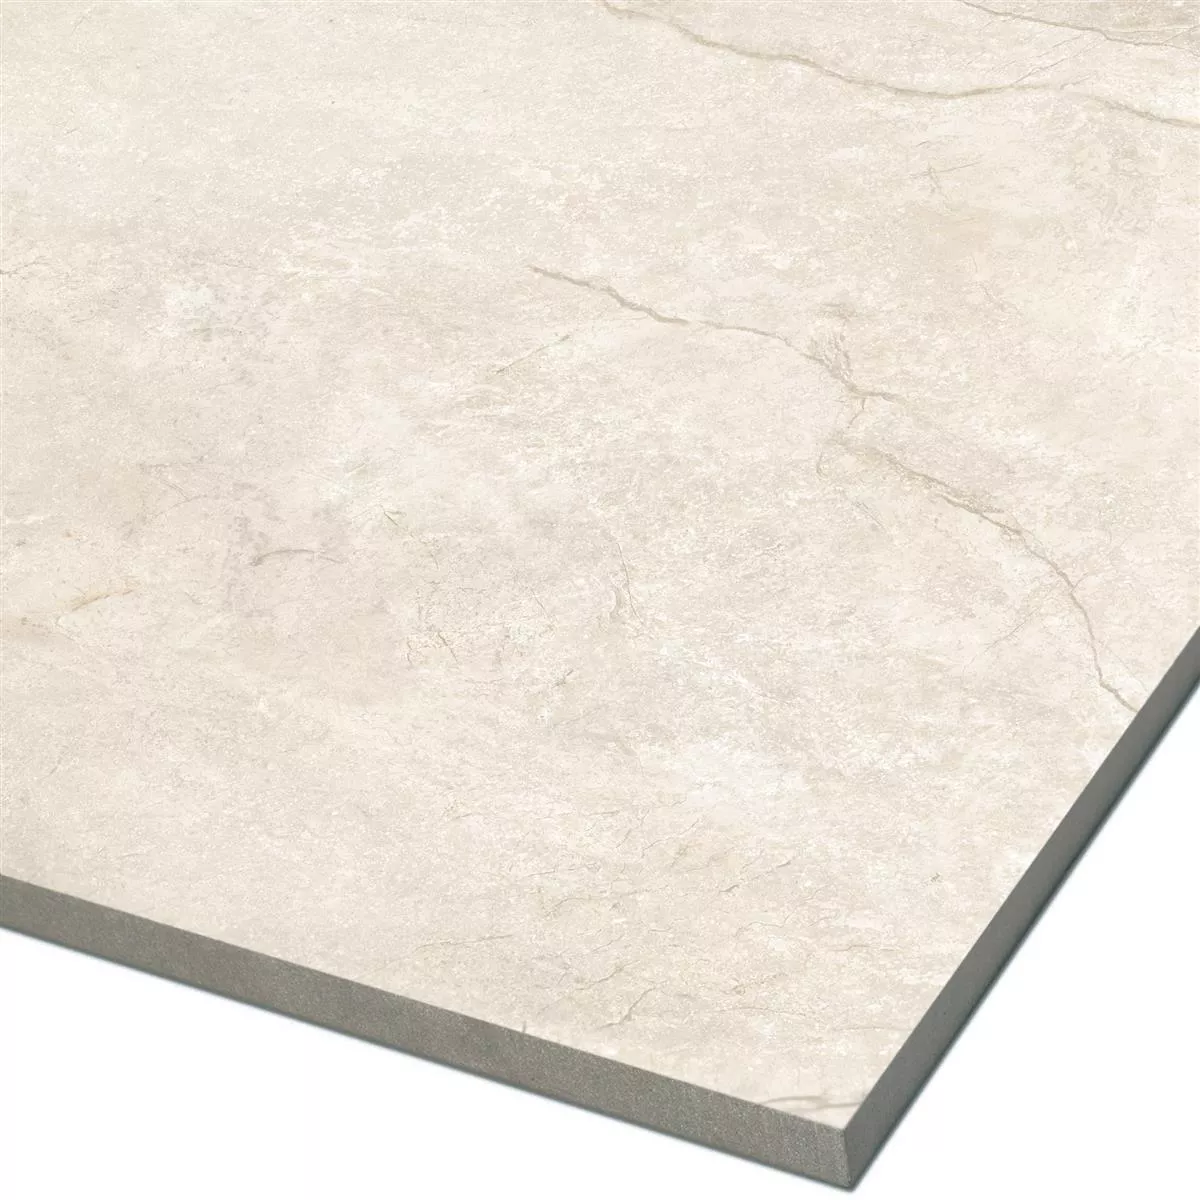 Sample Floor Tiles Pangea Marble Optic Polished Cream 60x60cm